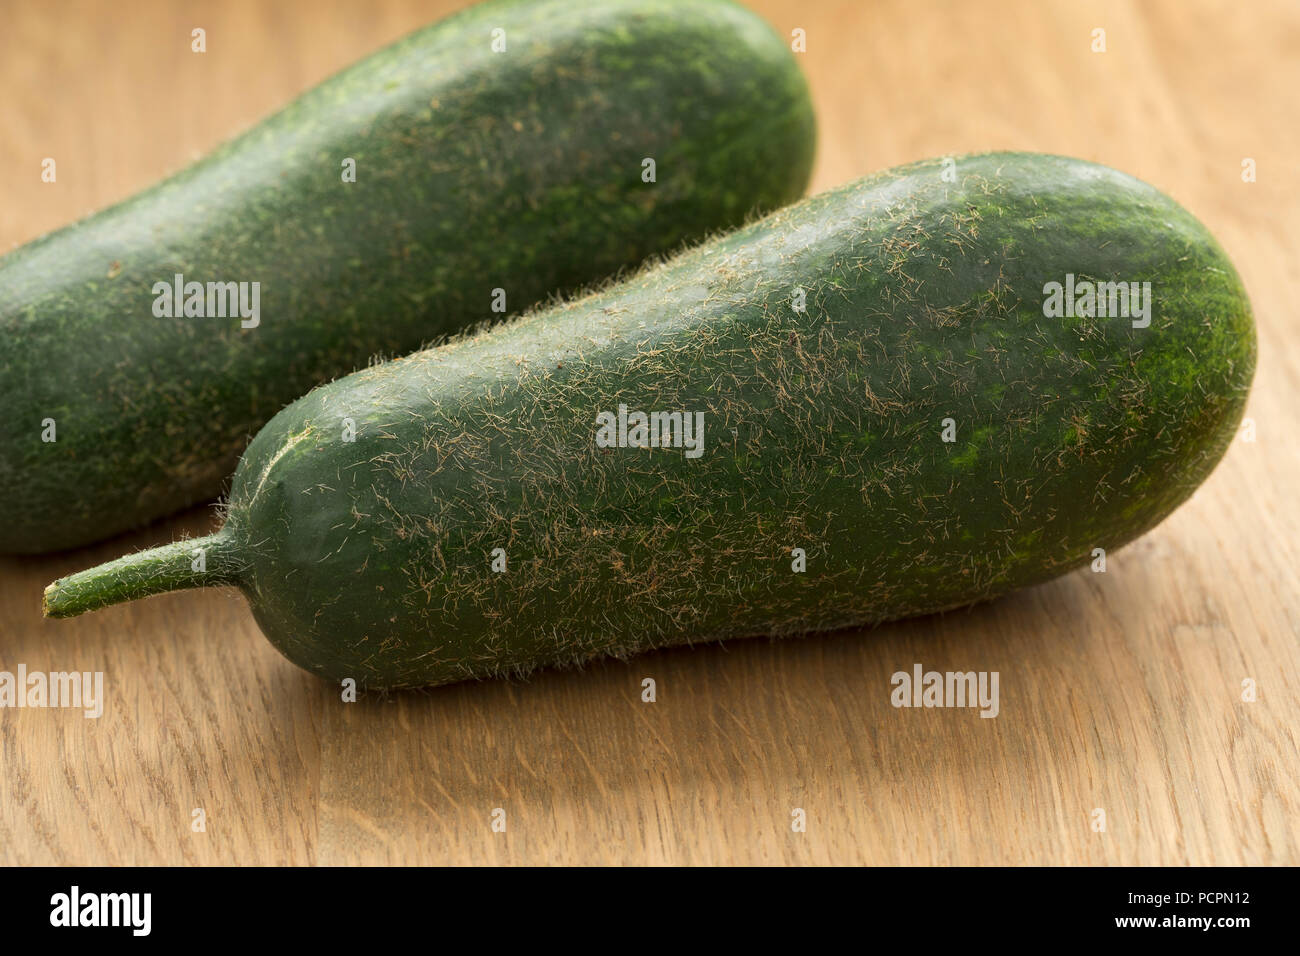 Pair of fresh raw fuzzy melon close up Stock Photo